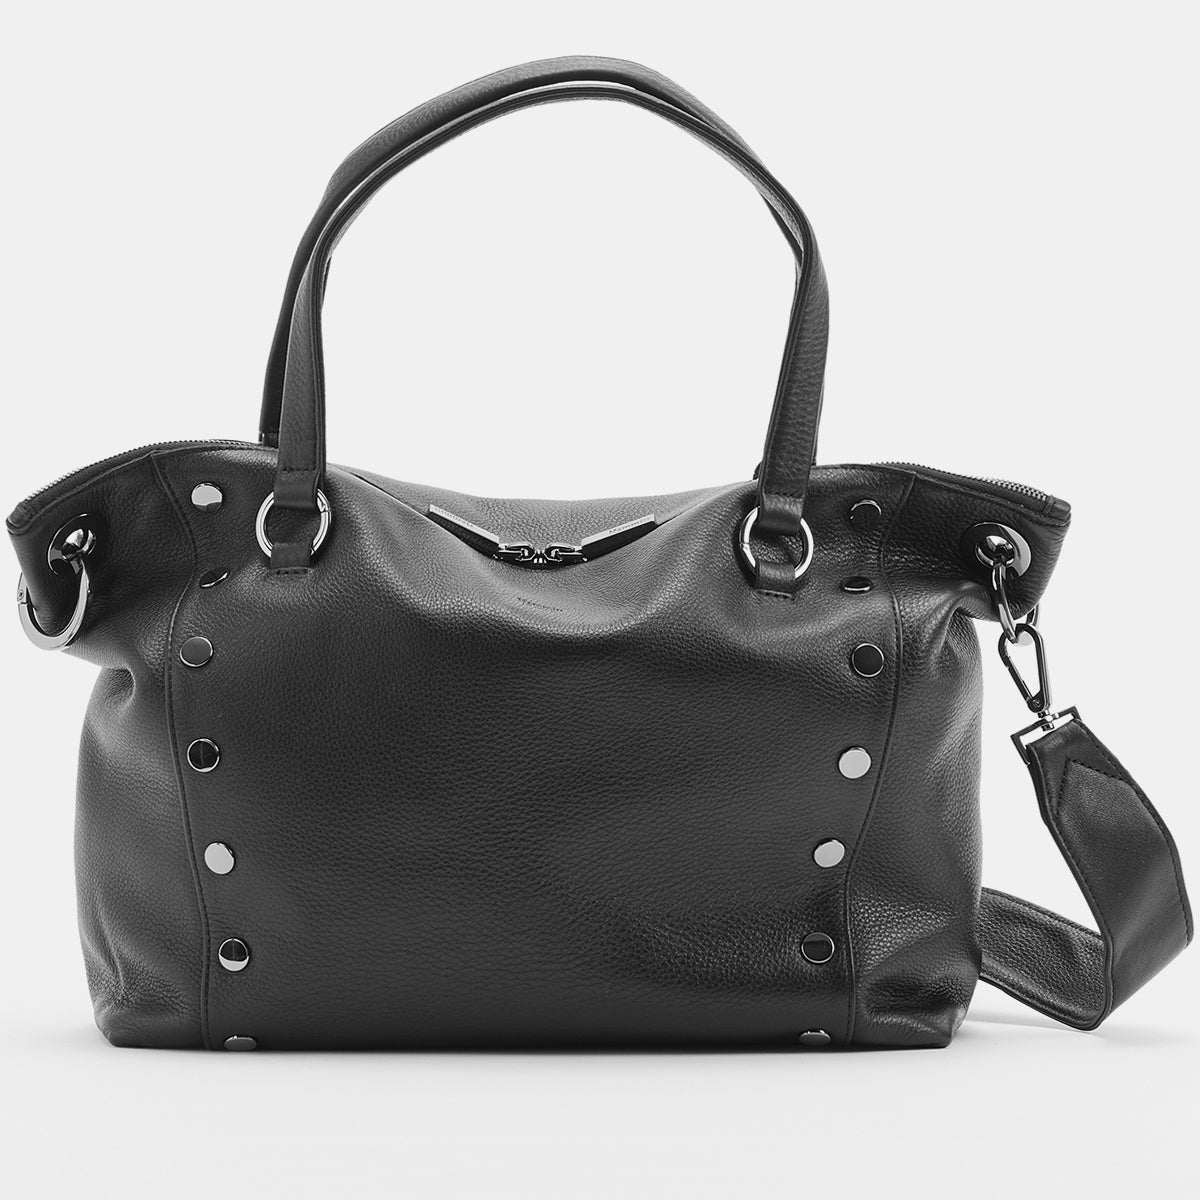 Buy E2O Classy Textured Black Satchel Handbag For Women'S at Amazon.in